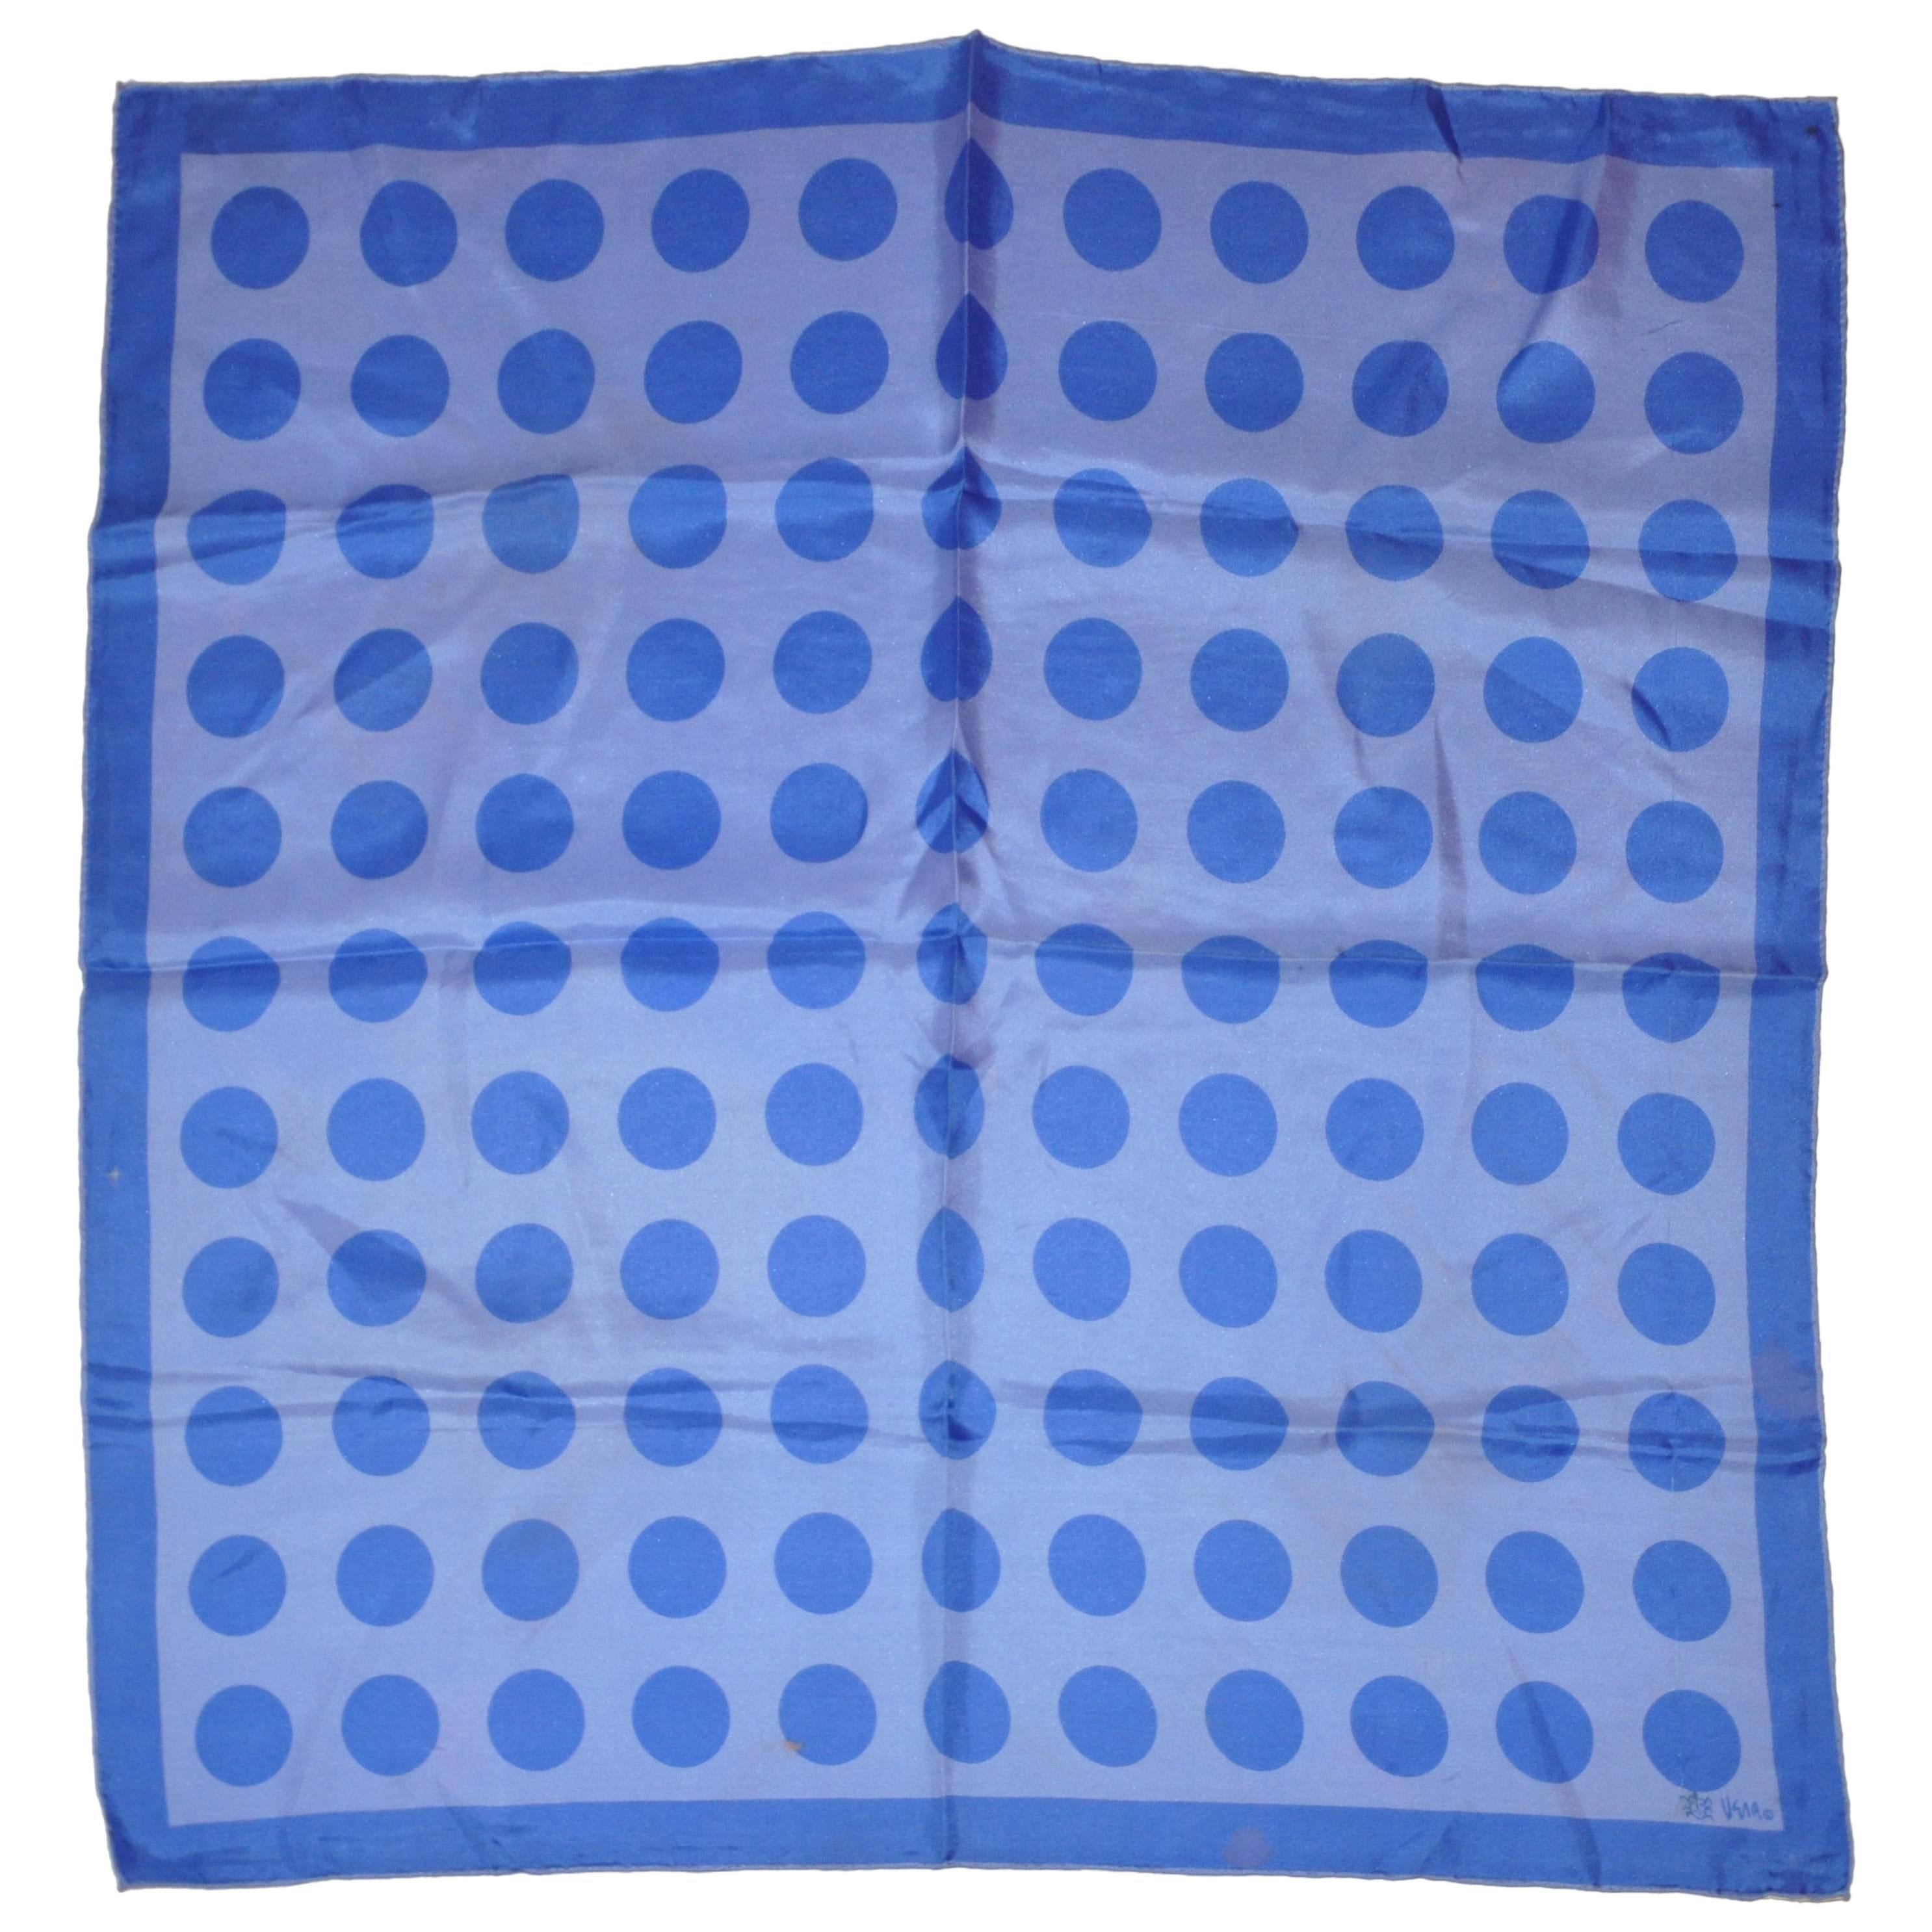 Vera for Bonwit Teller Lavender & Blue Polka Dots Silk Scarf